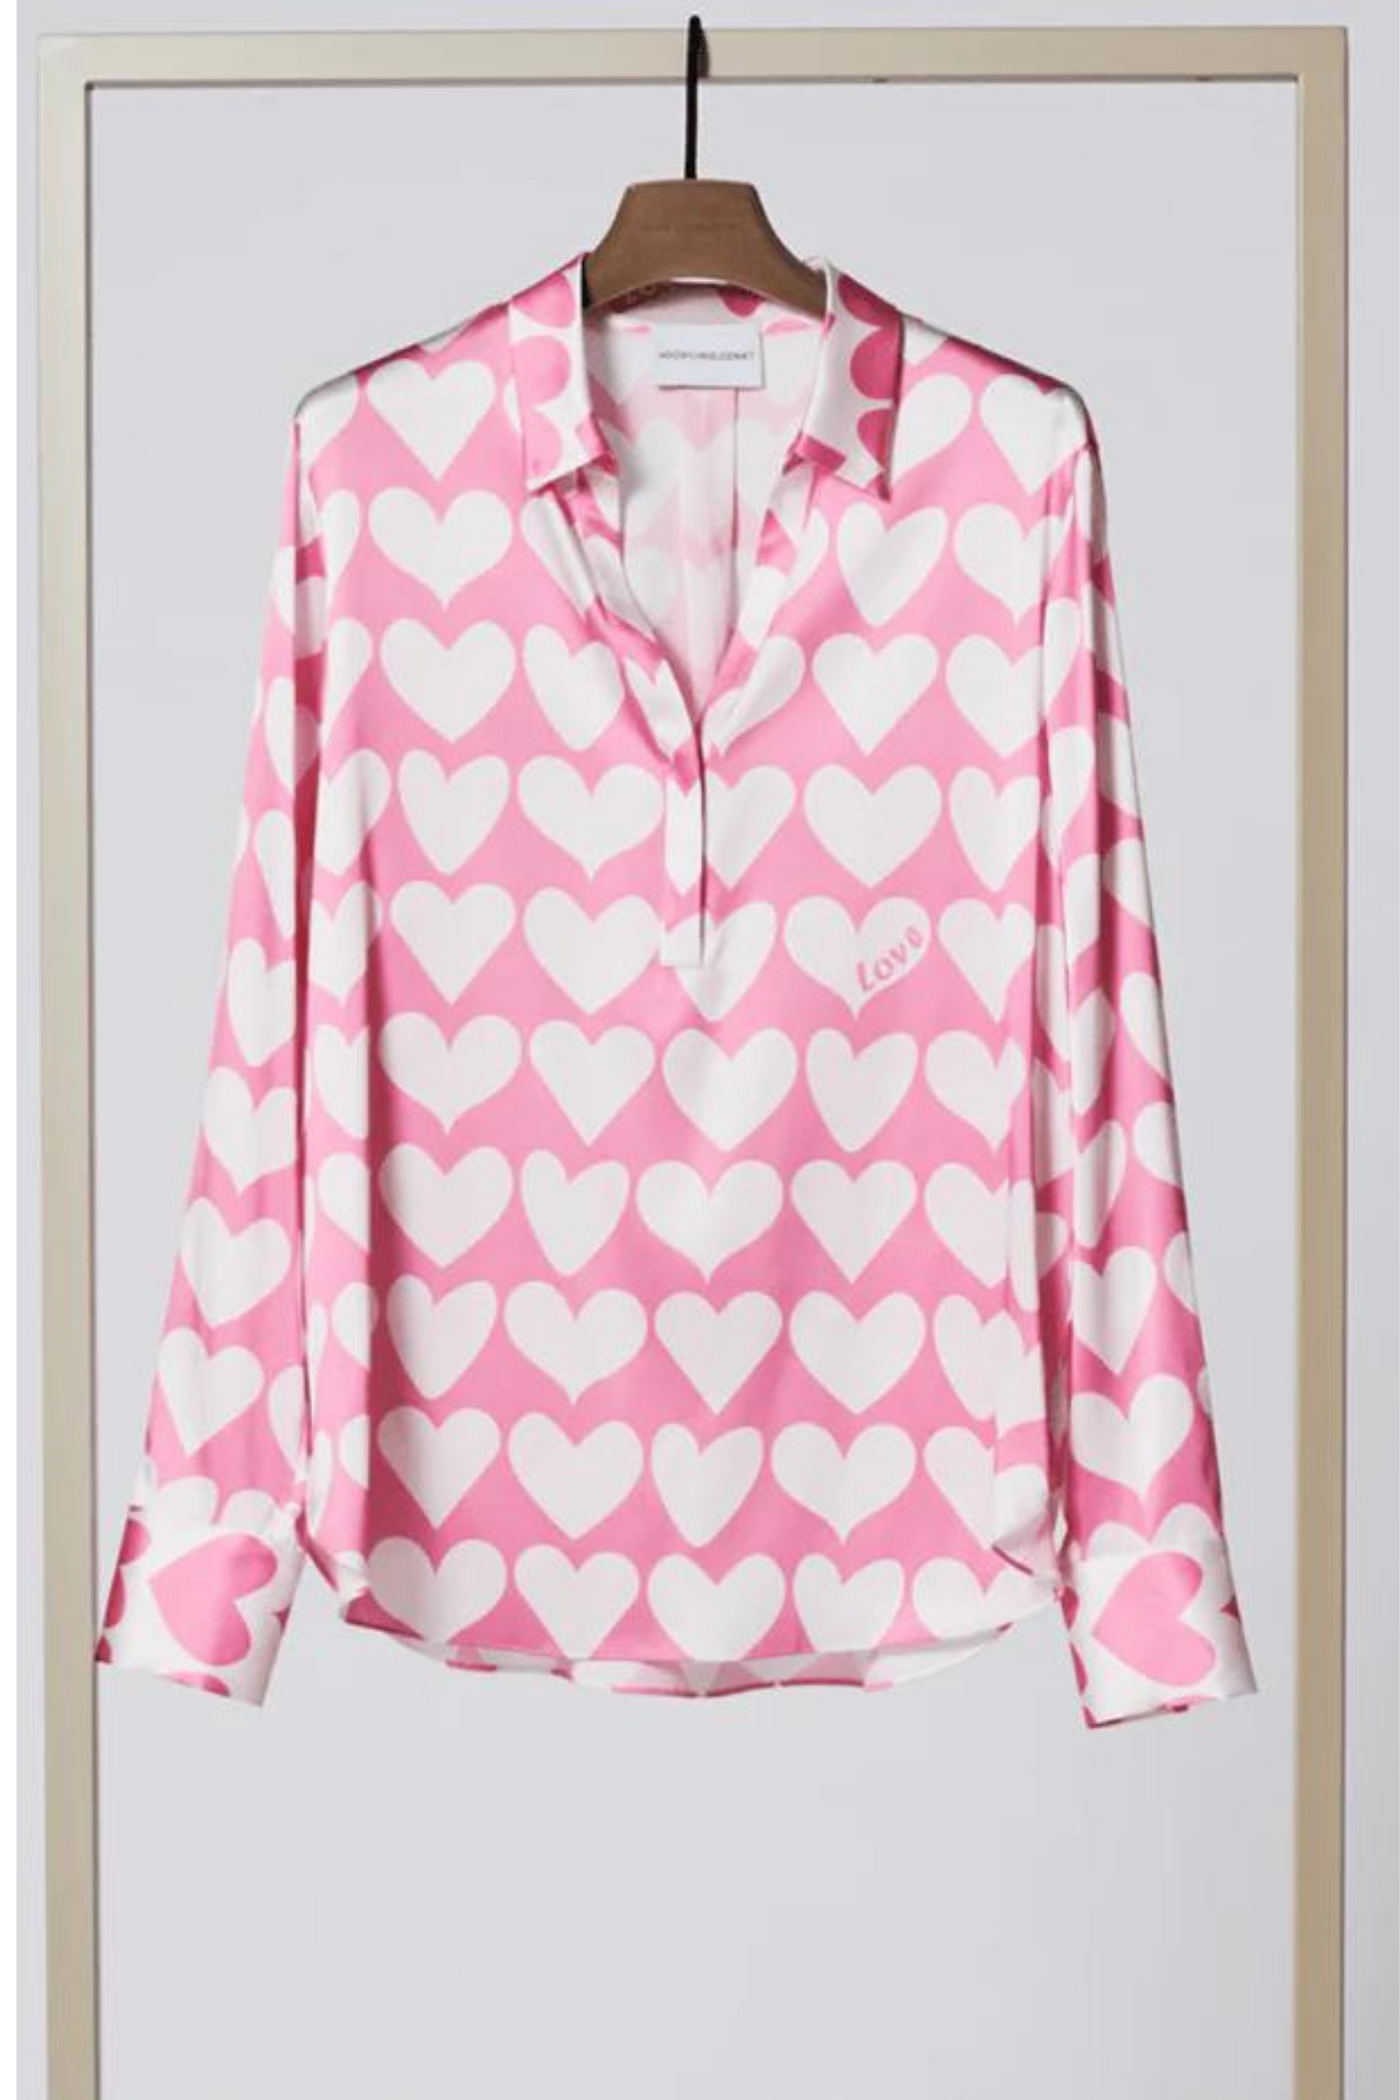 Herzen's Angelegenheit 6160  Shirt Pink With White Hearts